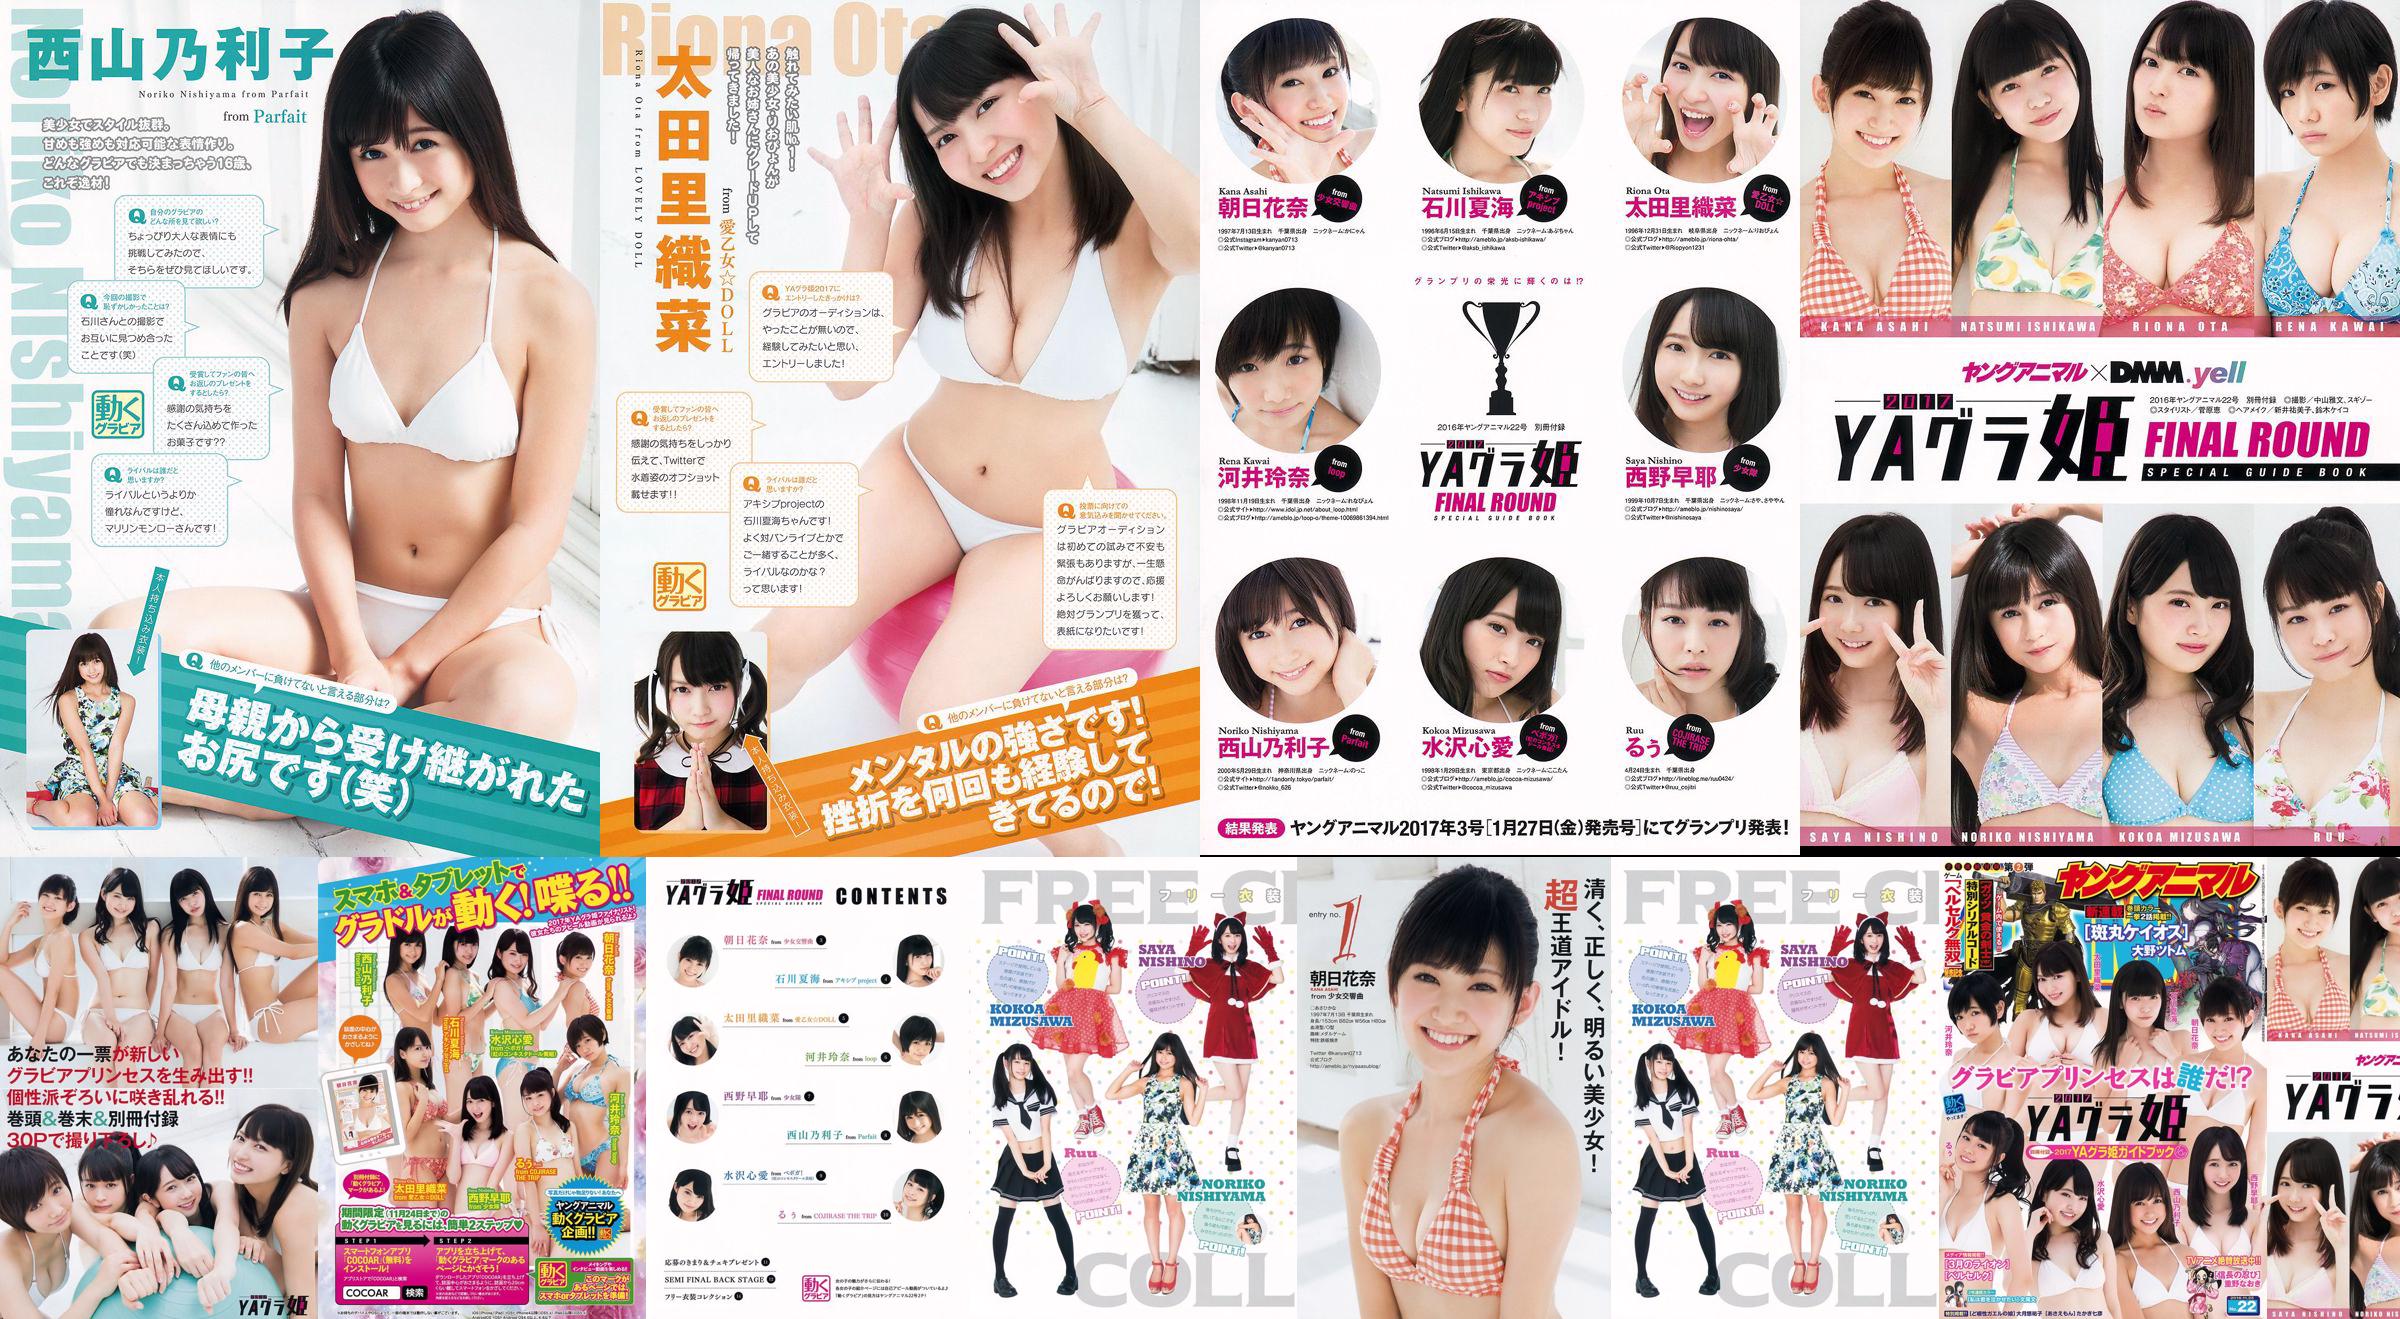 Mizusawa Beloved, Nishiyama Noriko, Nishino Haya, Kawai Reina, Ota Rina, Ishikawa Natsumi, Asahi Hana [น้องสัตว์] นิตยสารภาพถ่ายฉบับที่ 22 ประจำปี 2559 No.aa6383 หน้า 1